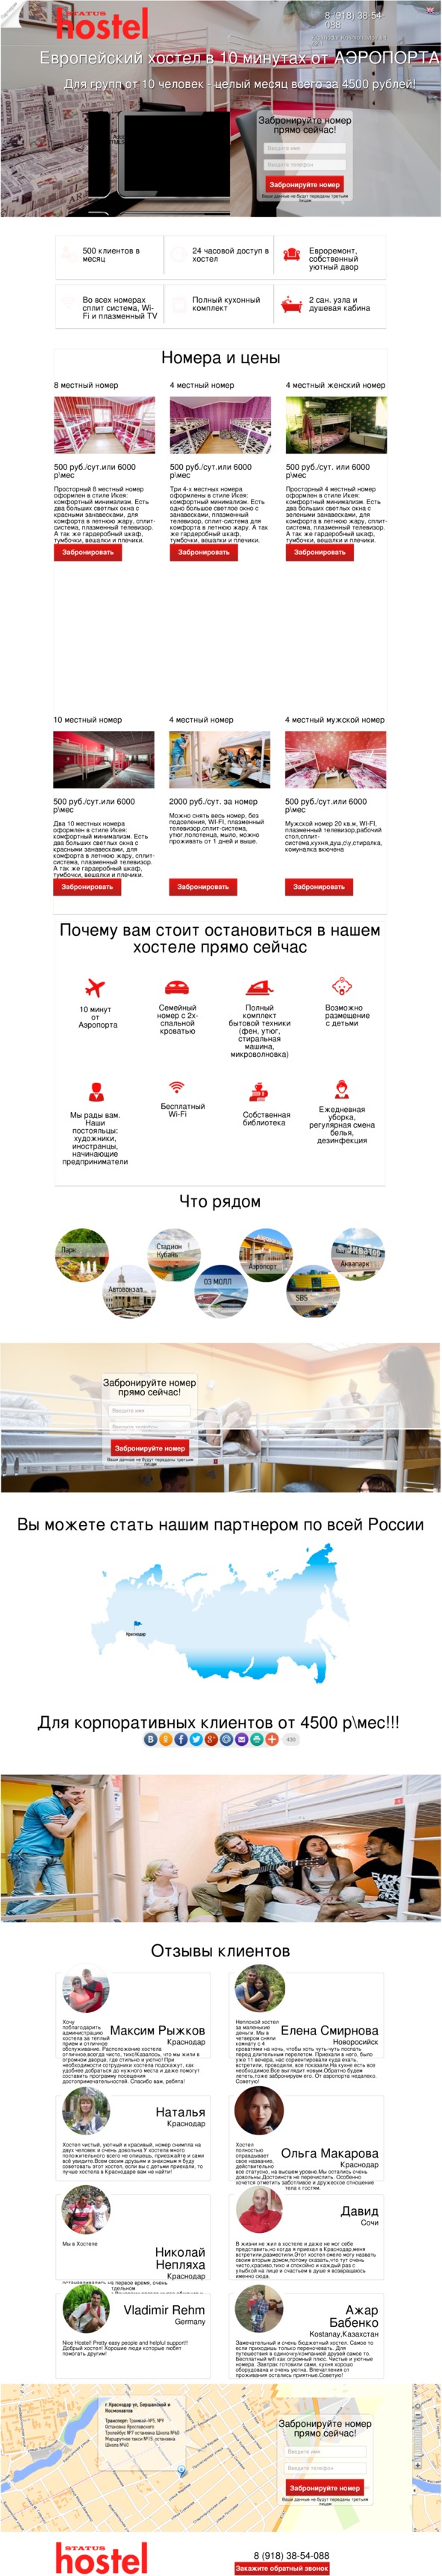 Status Hostel - Европейский Хостел в Краснодаре